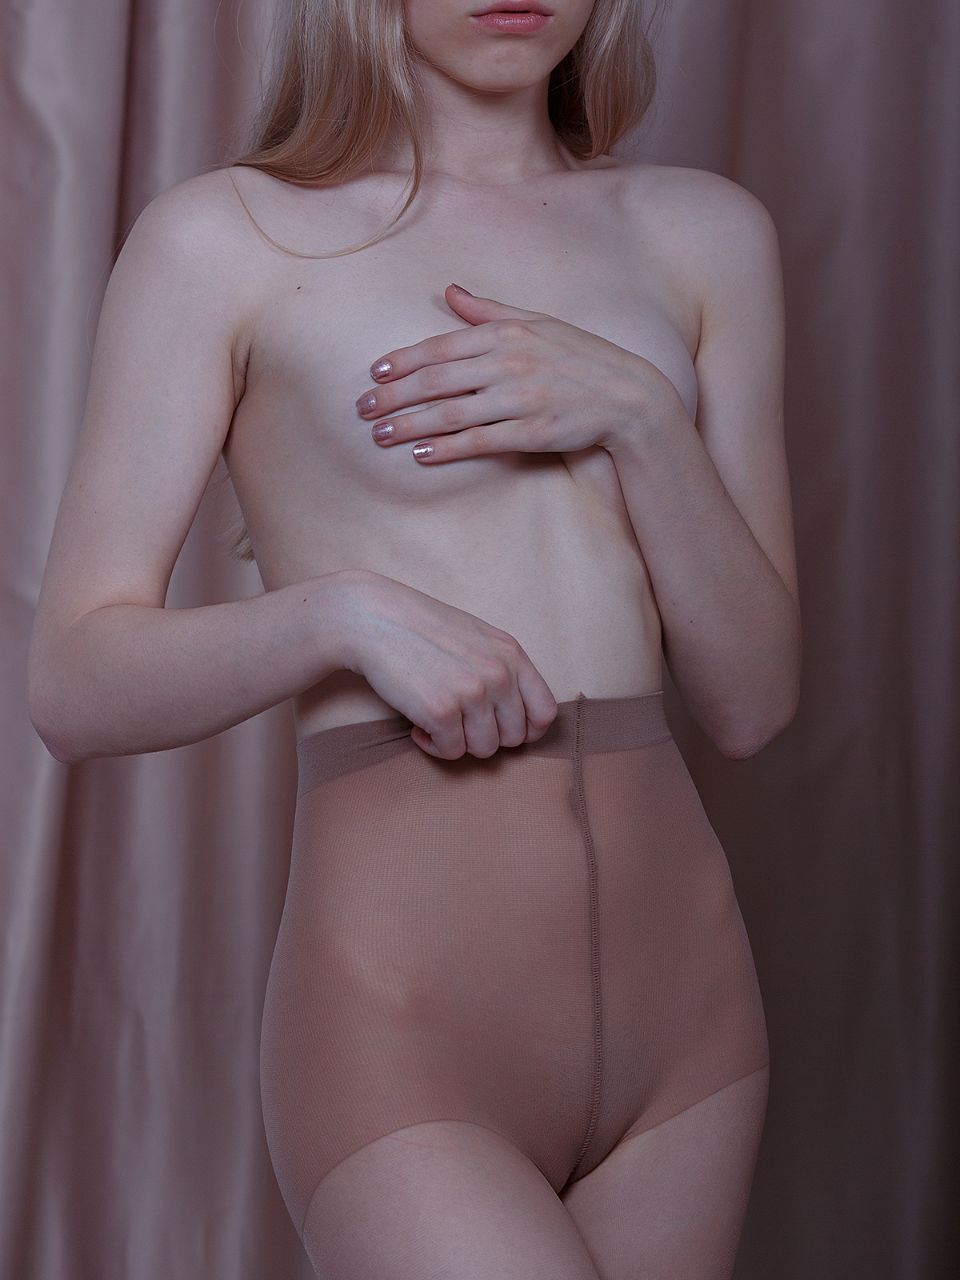 Europa teen, milf, mature beautiful body - arsivizm gallery